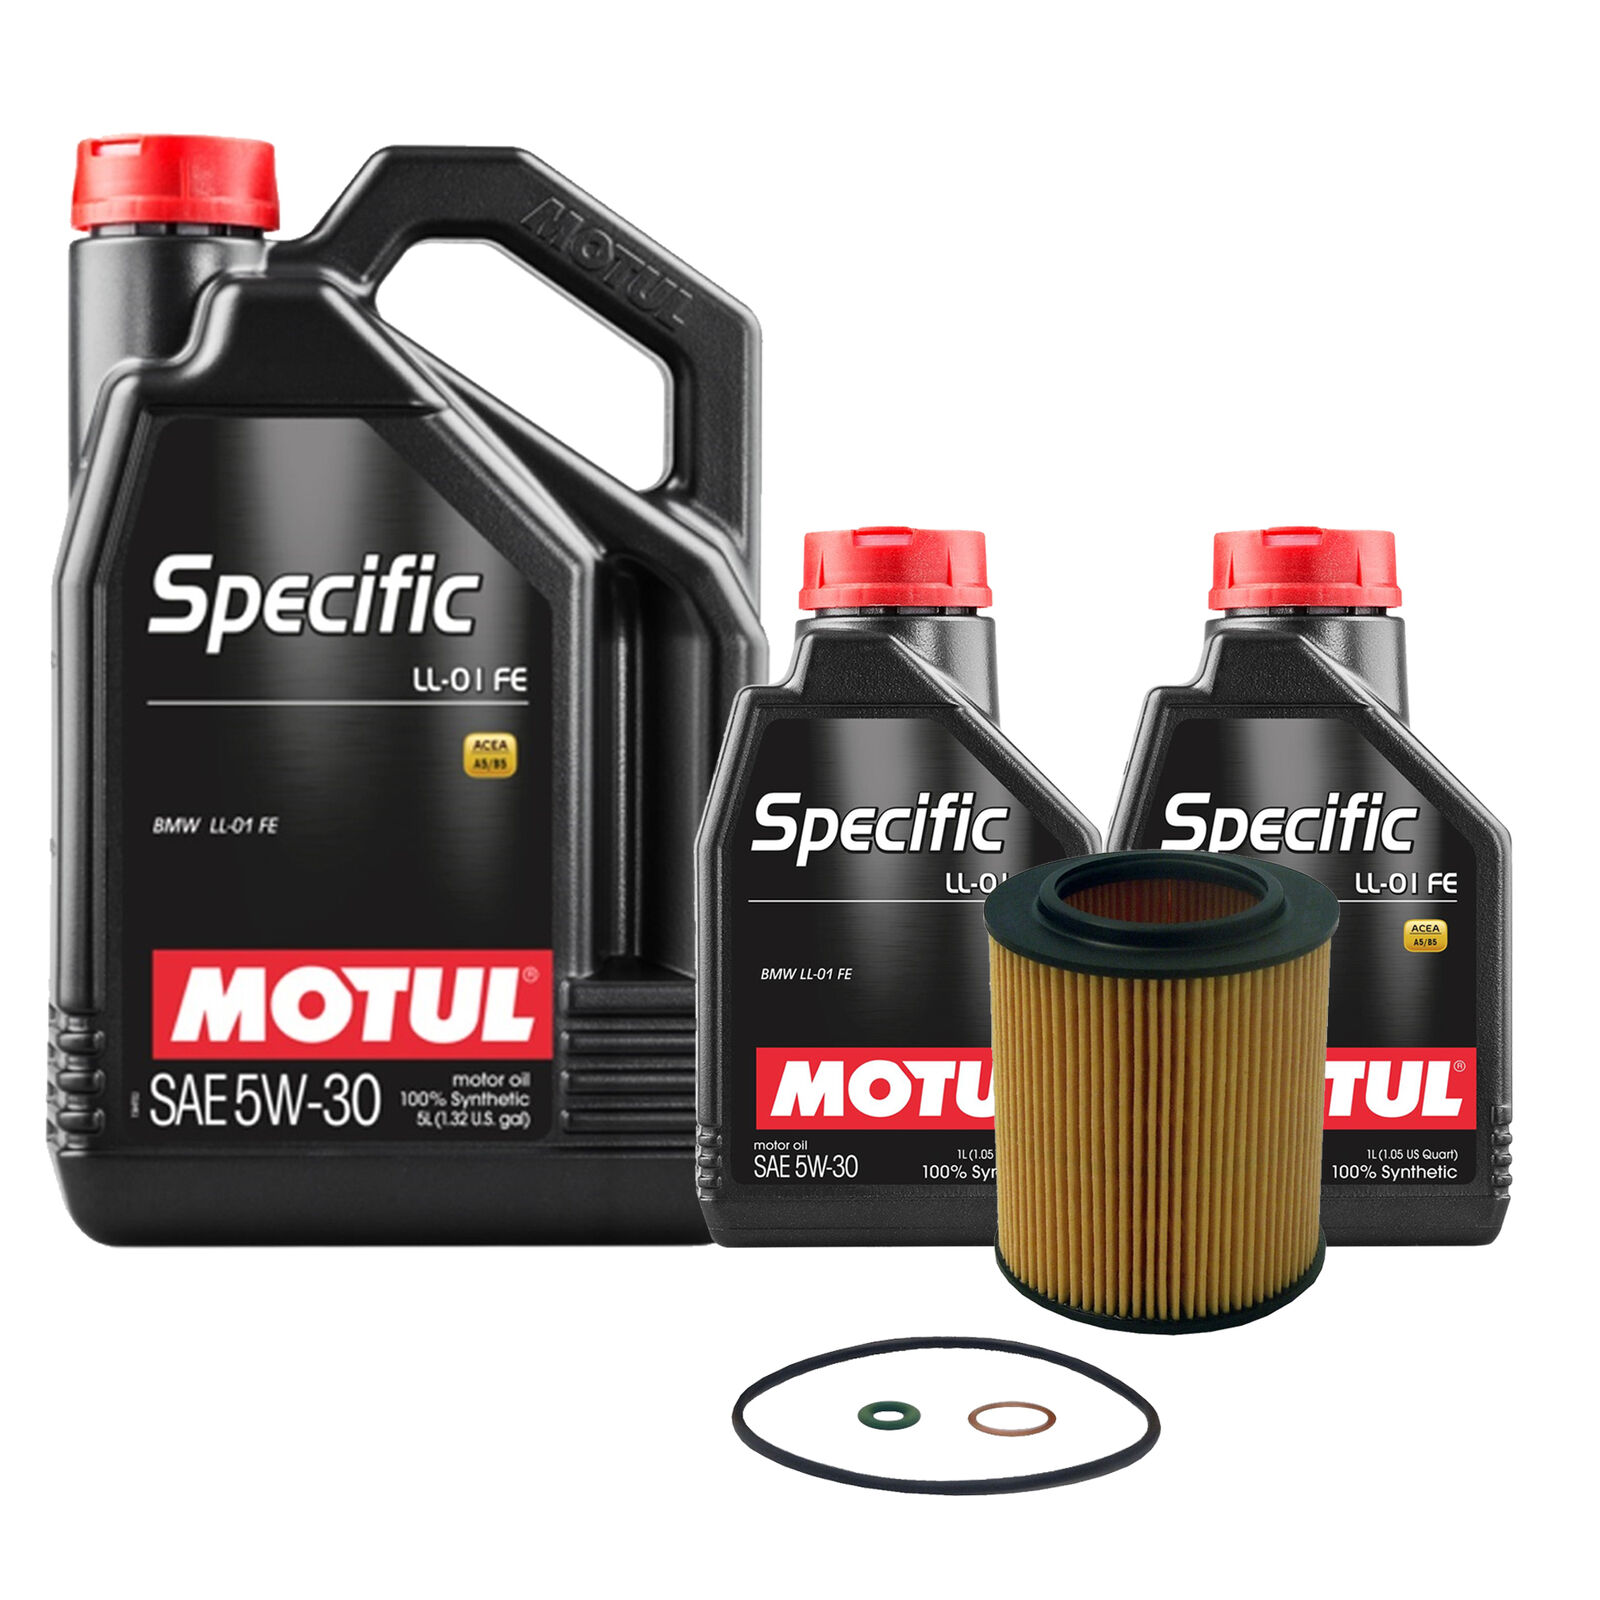 7L Motul SPECIFIC LL-01 FE 5W-30 Wix Filter Motor Oil Change Kit API SN